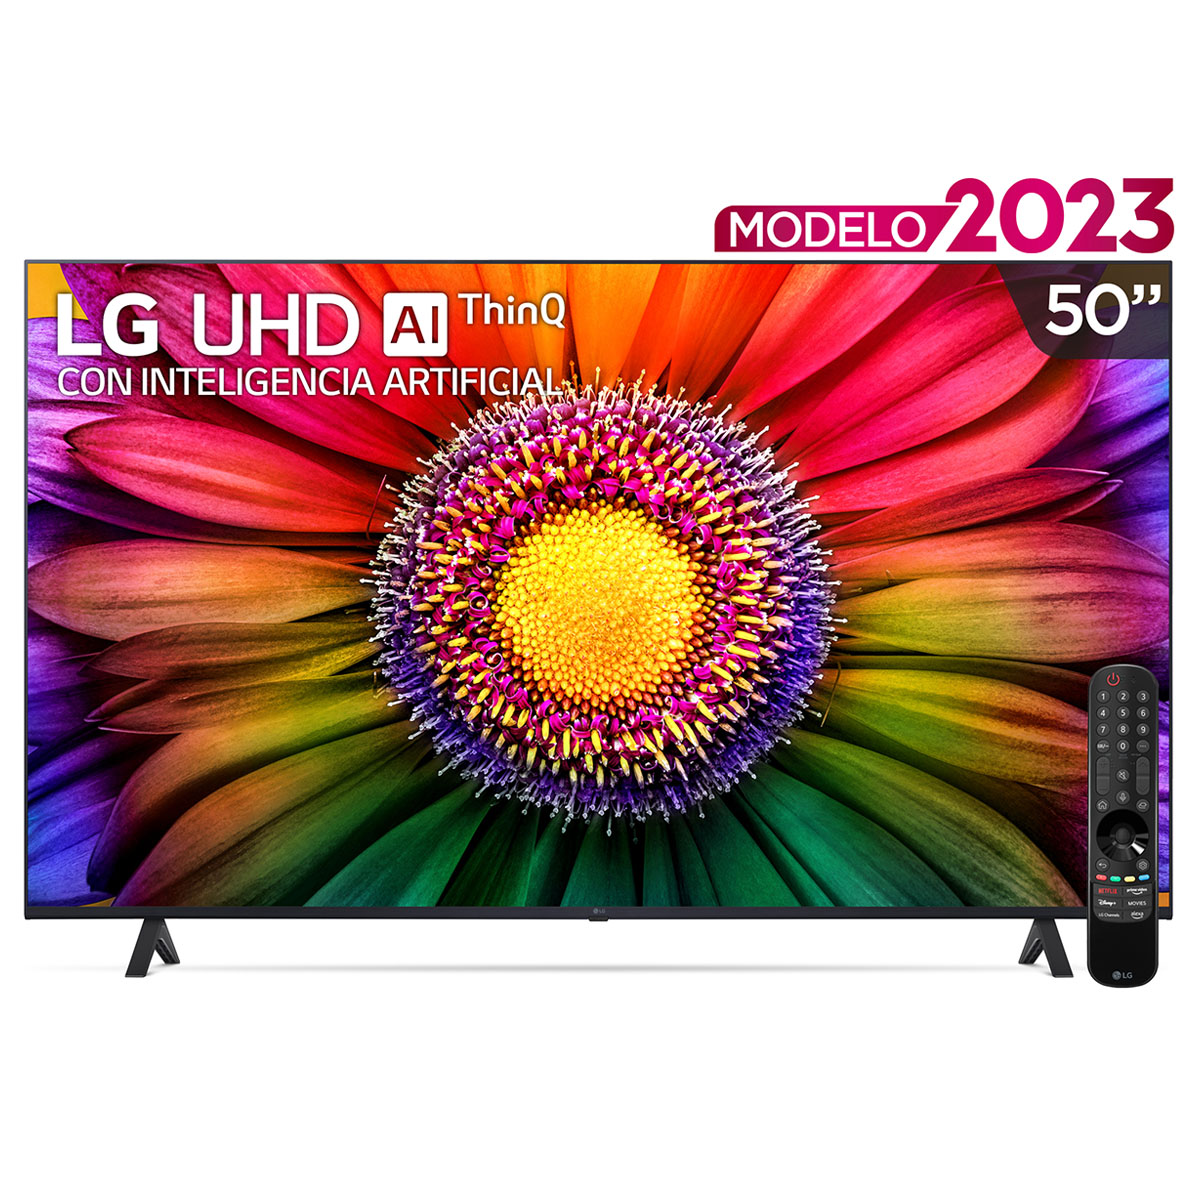 Pantalla LG 50" UHD AI ThinQ 4K SMART TV  50UR8750PSA